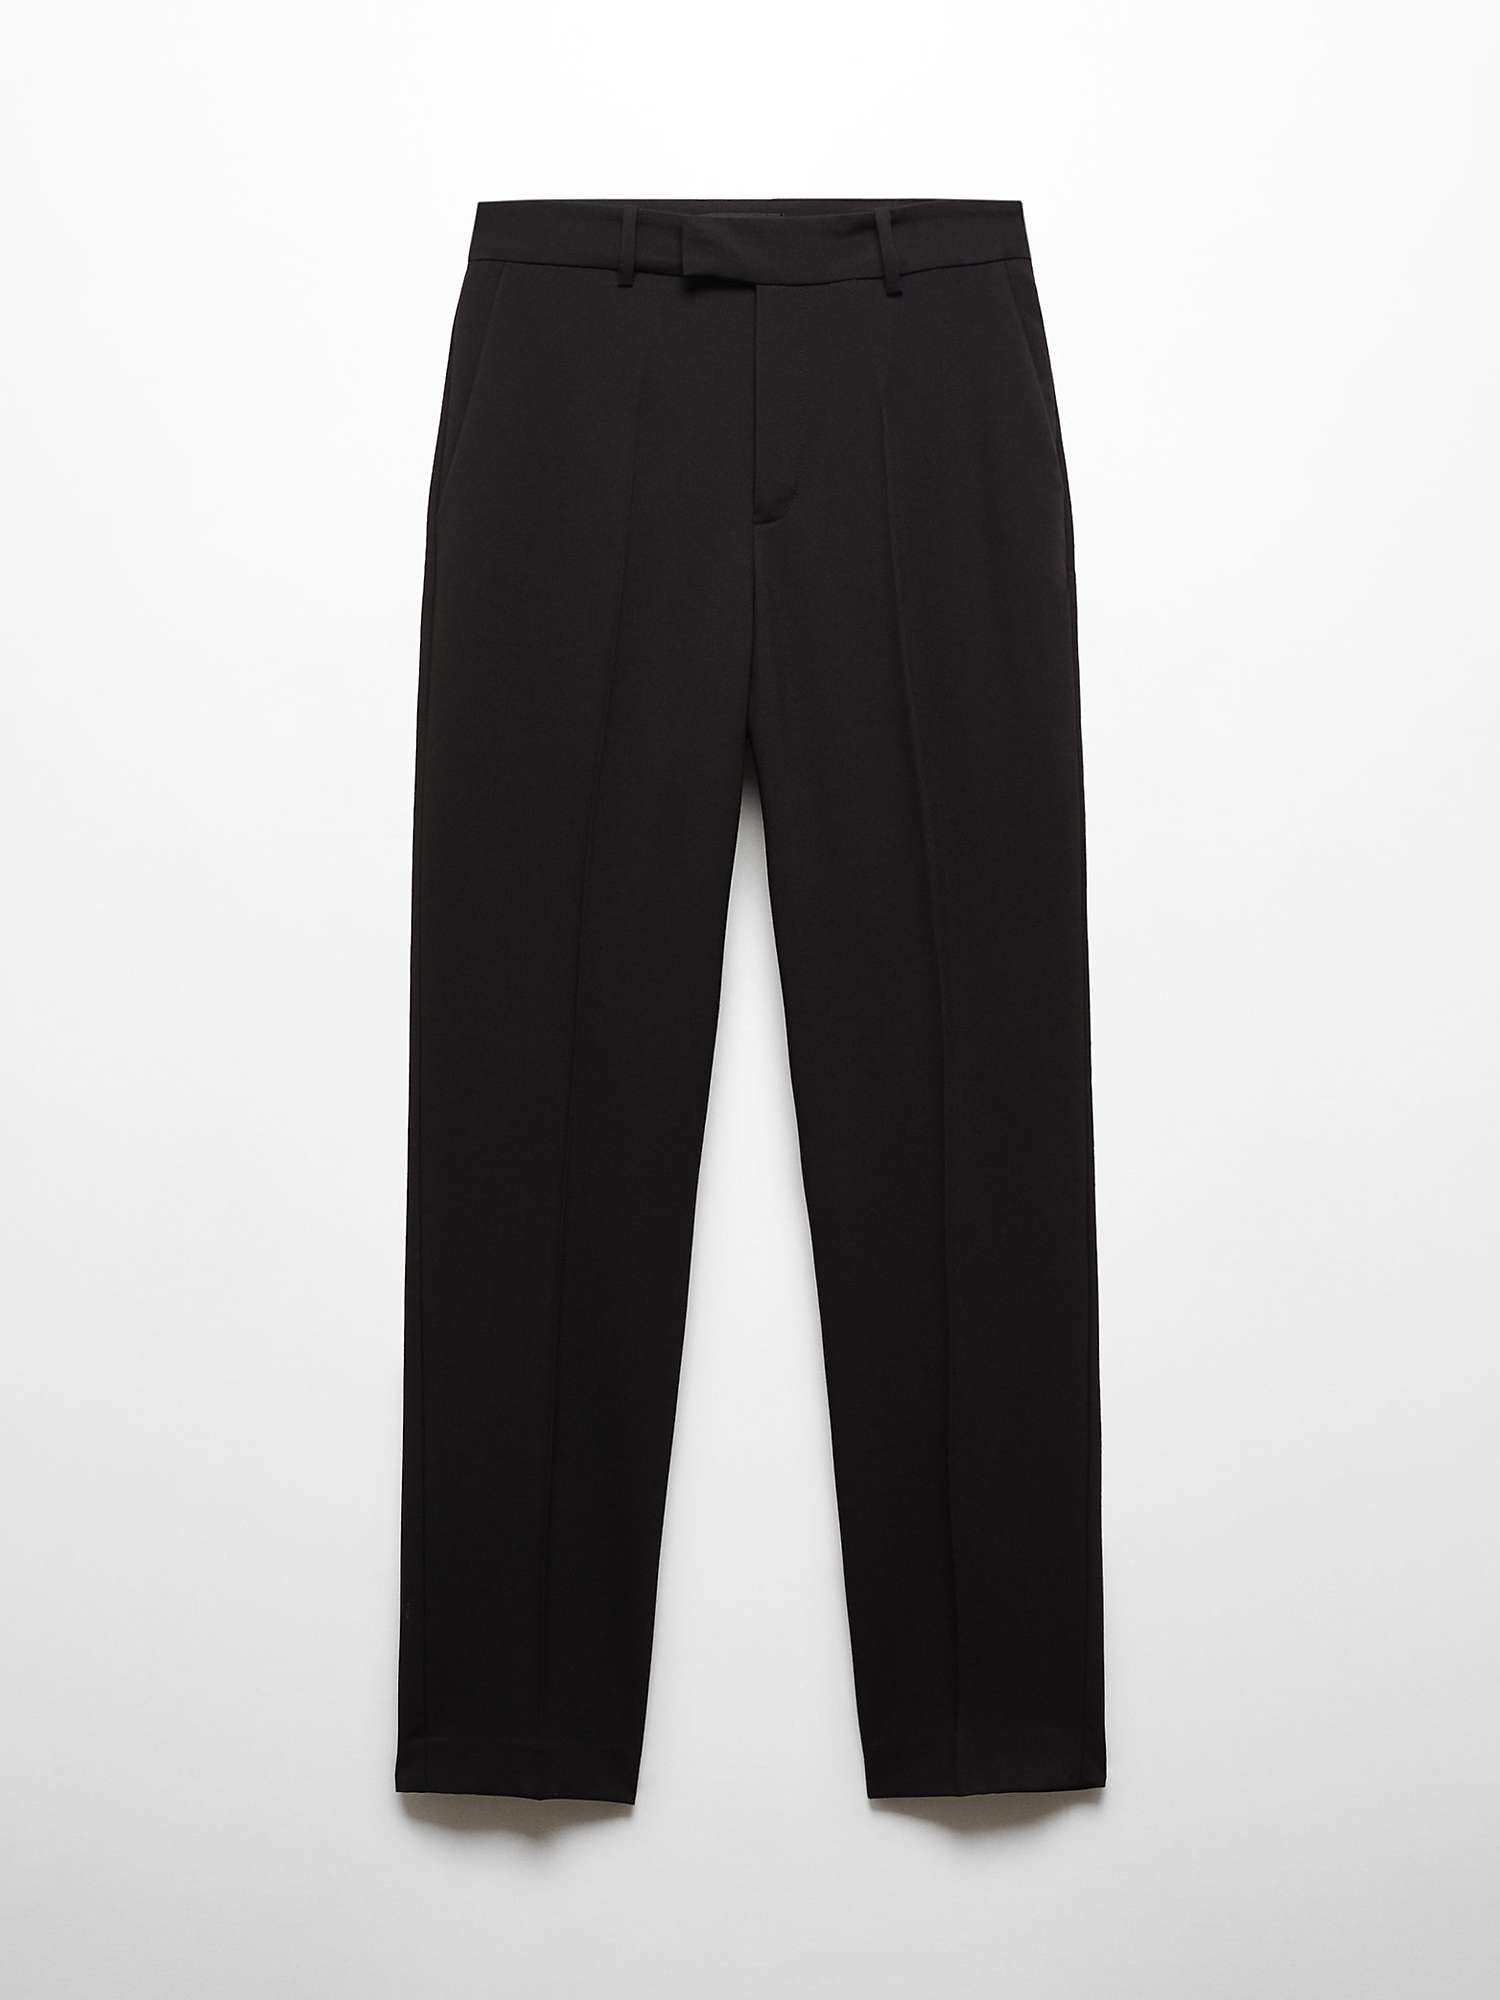 Buy Mango Straight Suit Trousers, Black Online at johnlewis.com